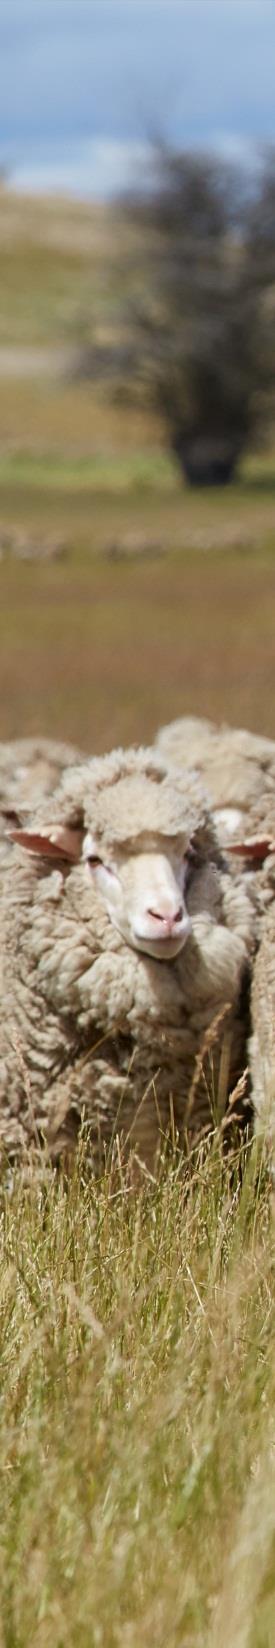 Merino wool compared to other fibers Fine wool, like